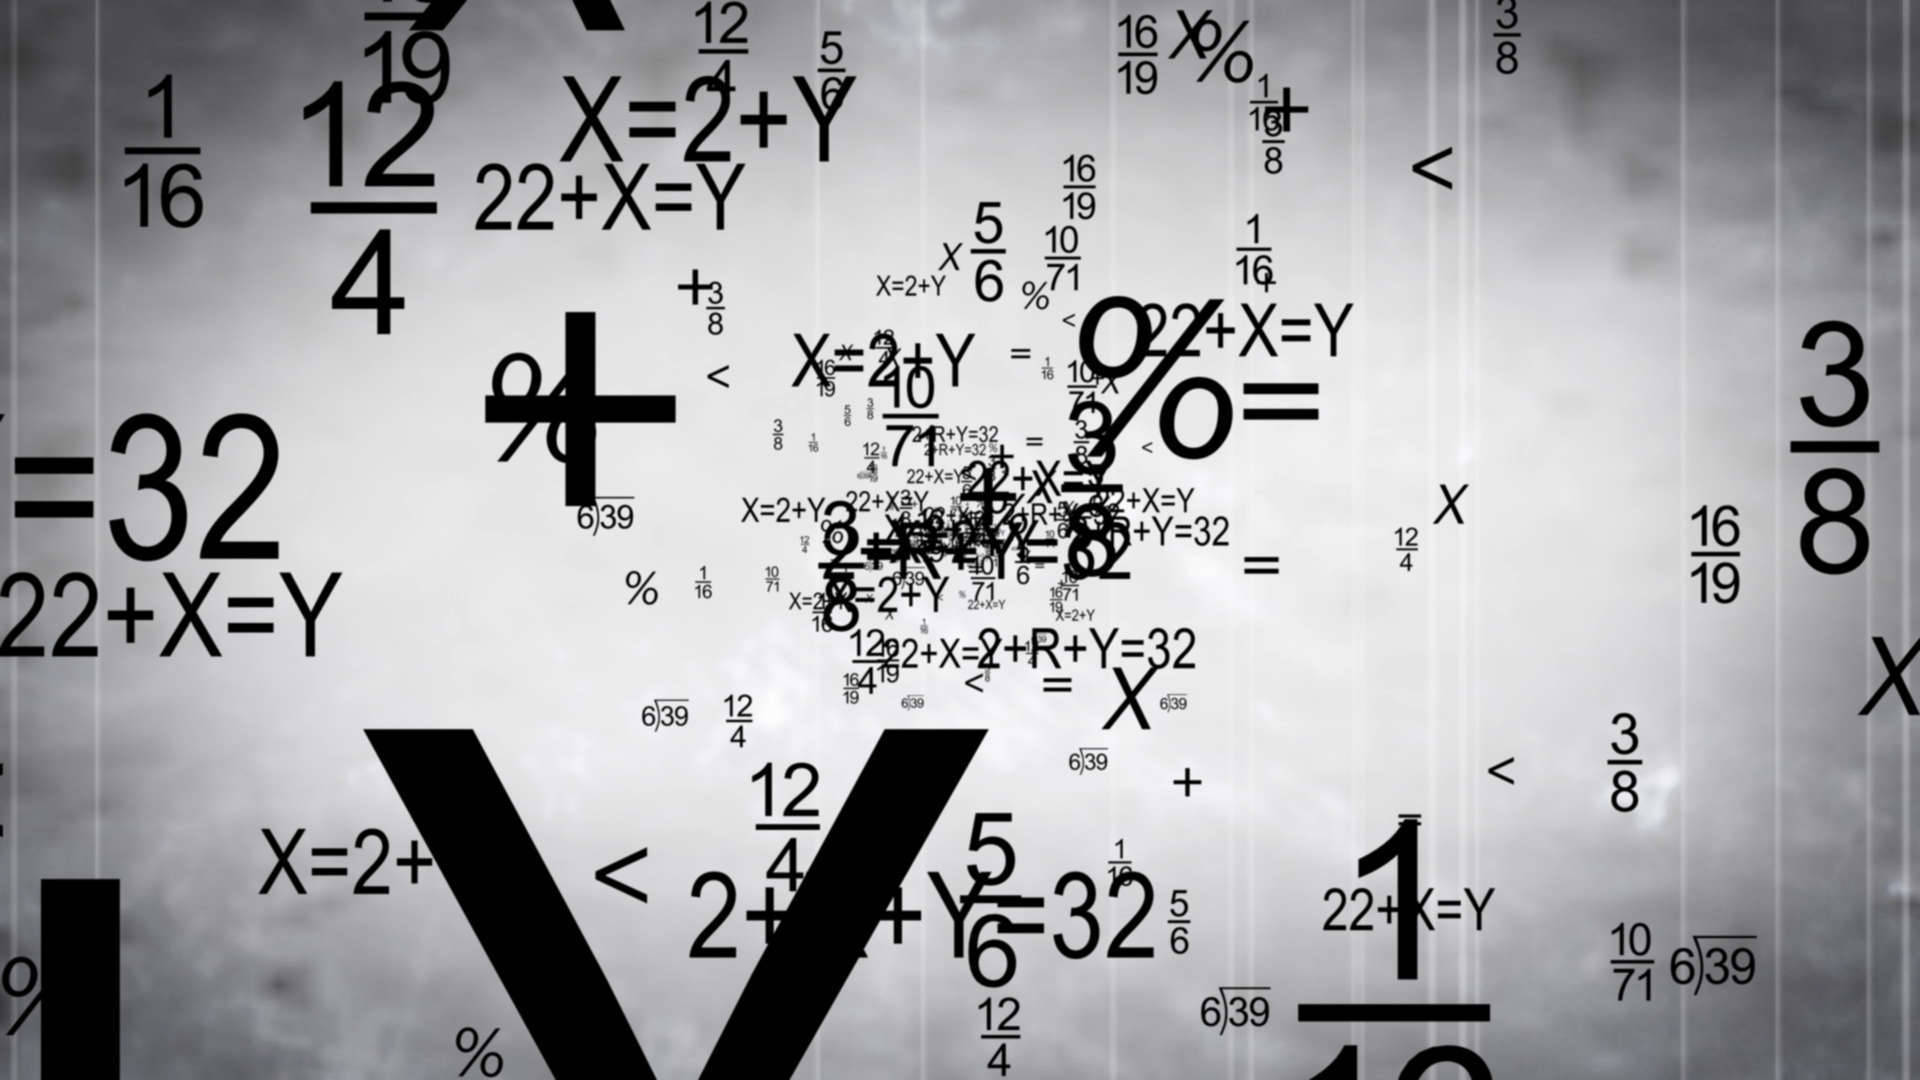 mathematical symbols wallpaper